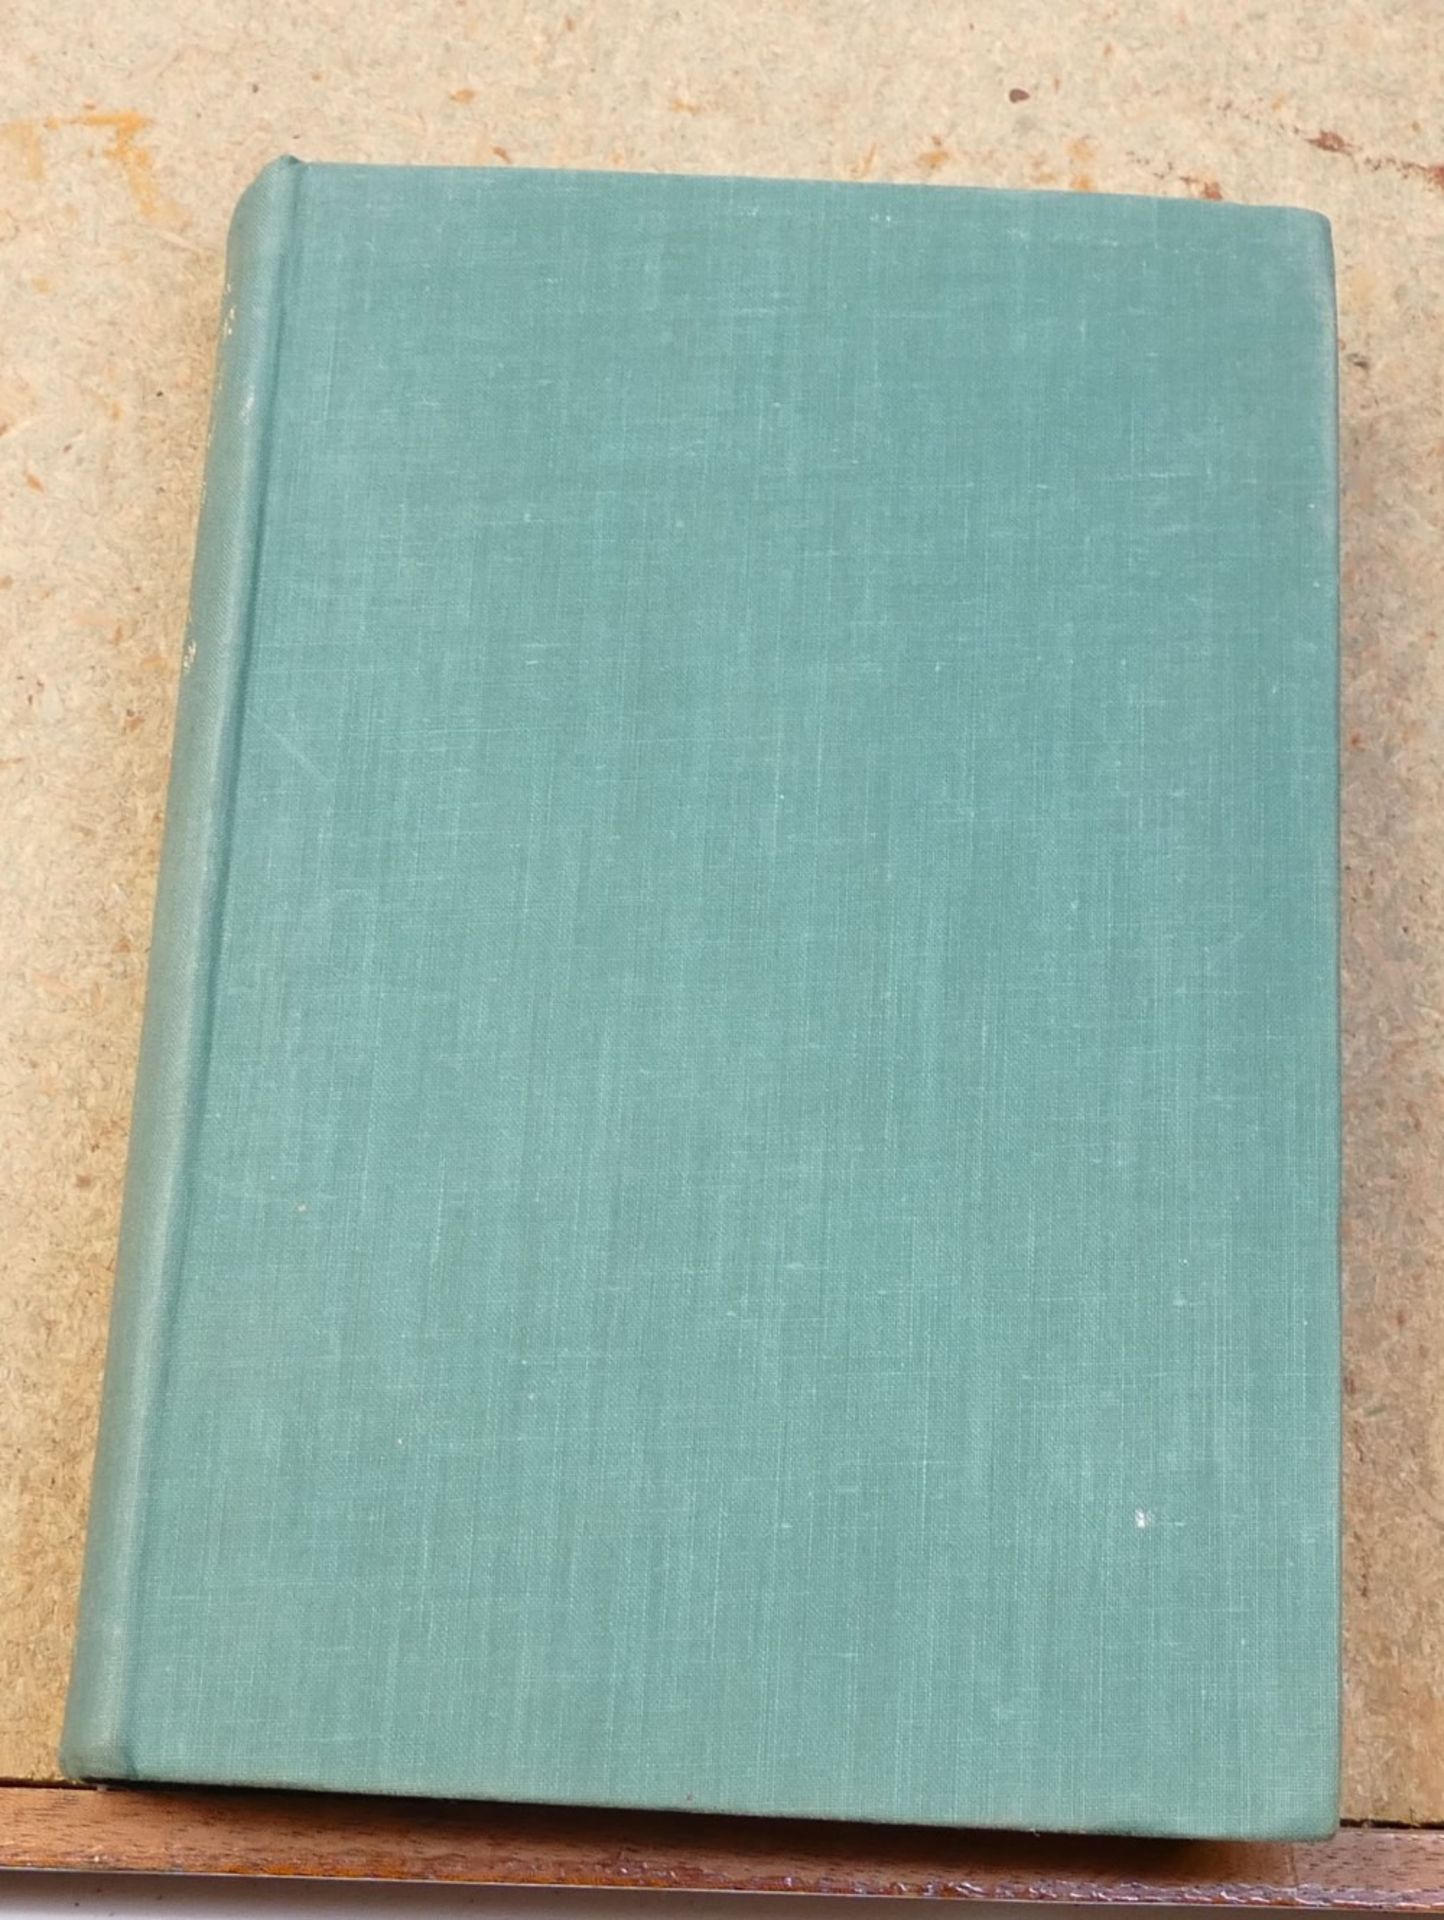 Six x 1st edition books by John Buchan - Sir Walter Scott 1932, Prester John 1910 (slight a/f), - Image 16 of 18